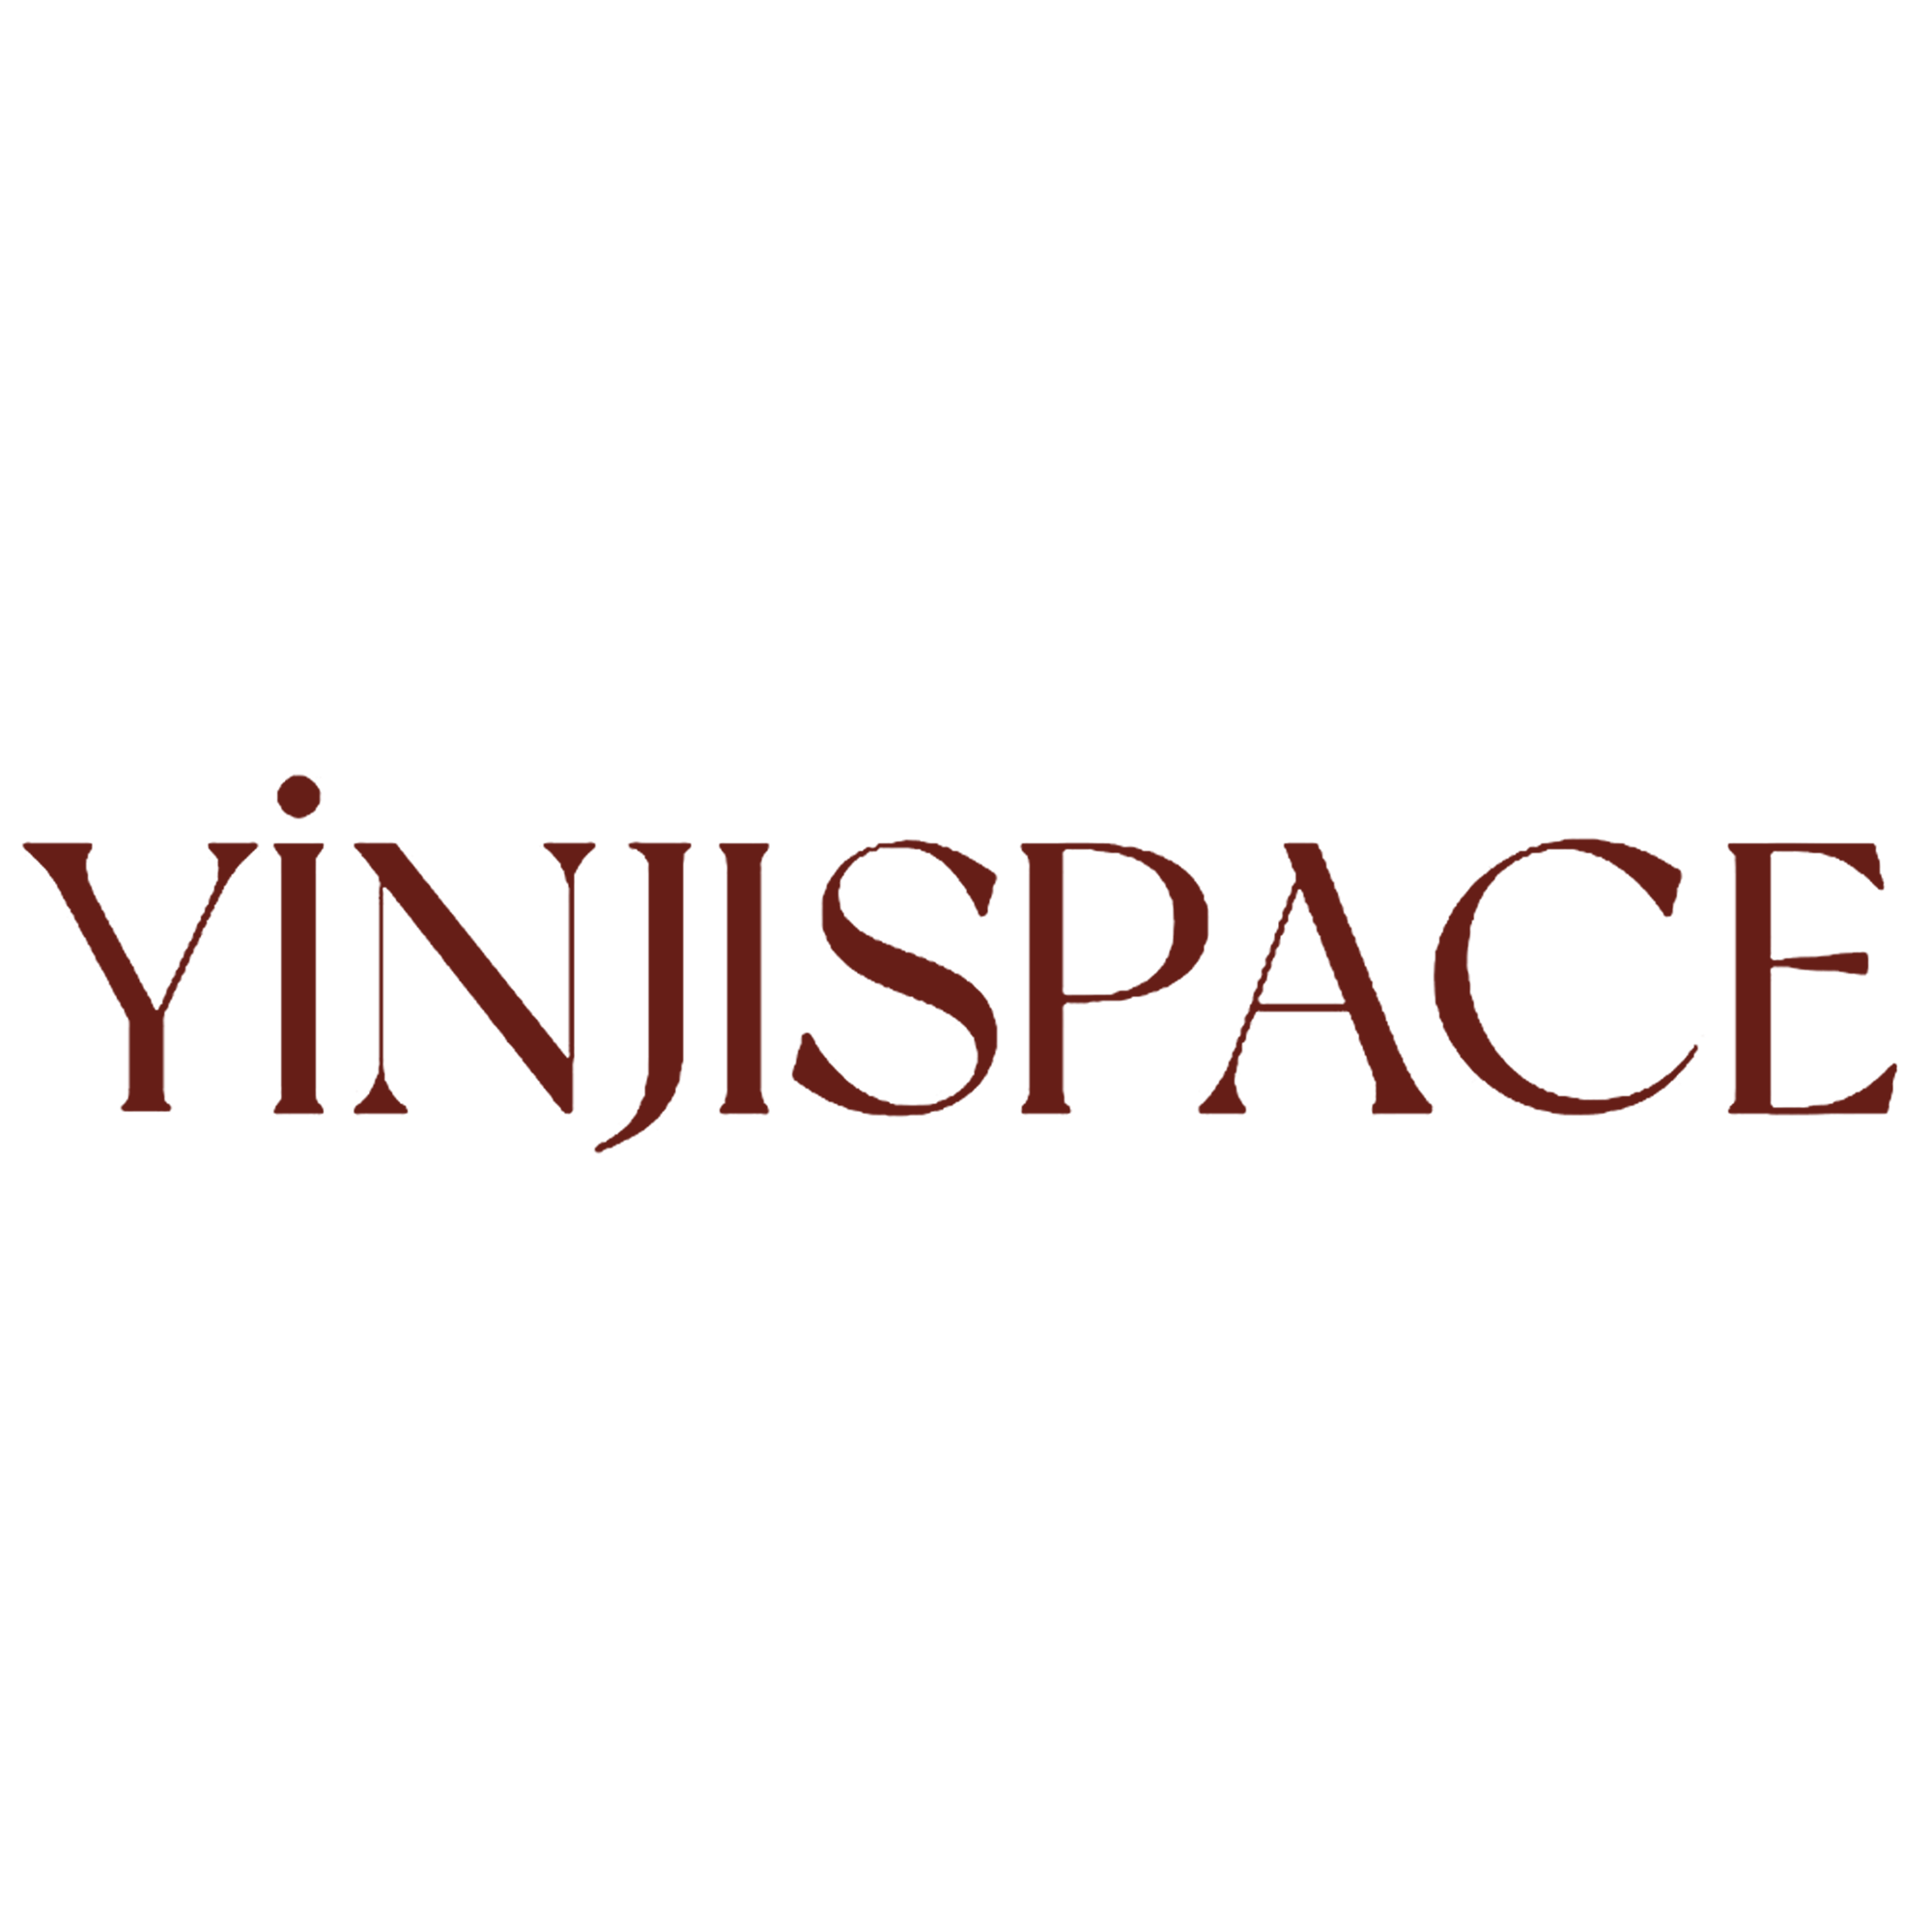 Alexis-Dupont-Interiors-Yinjispace-logo.png